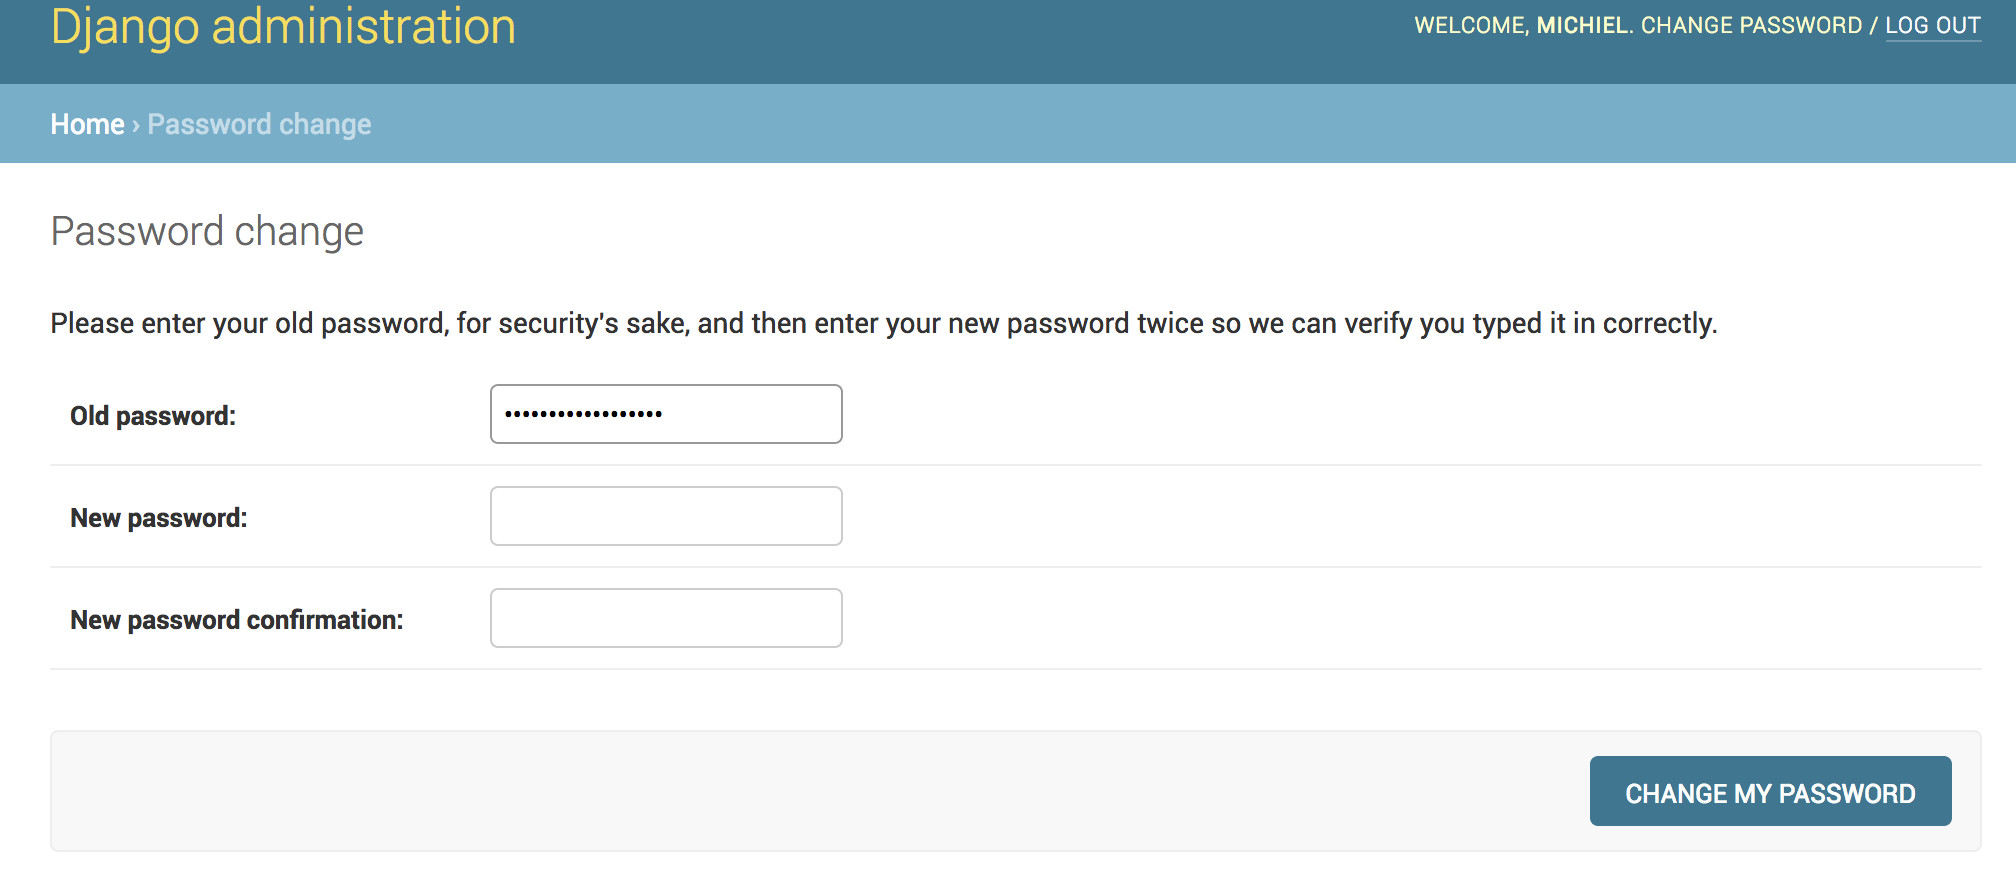 Existing password. Html шаблон замена пароля. CSS Django admin. Change password form. Check password Django.